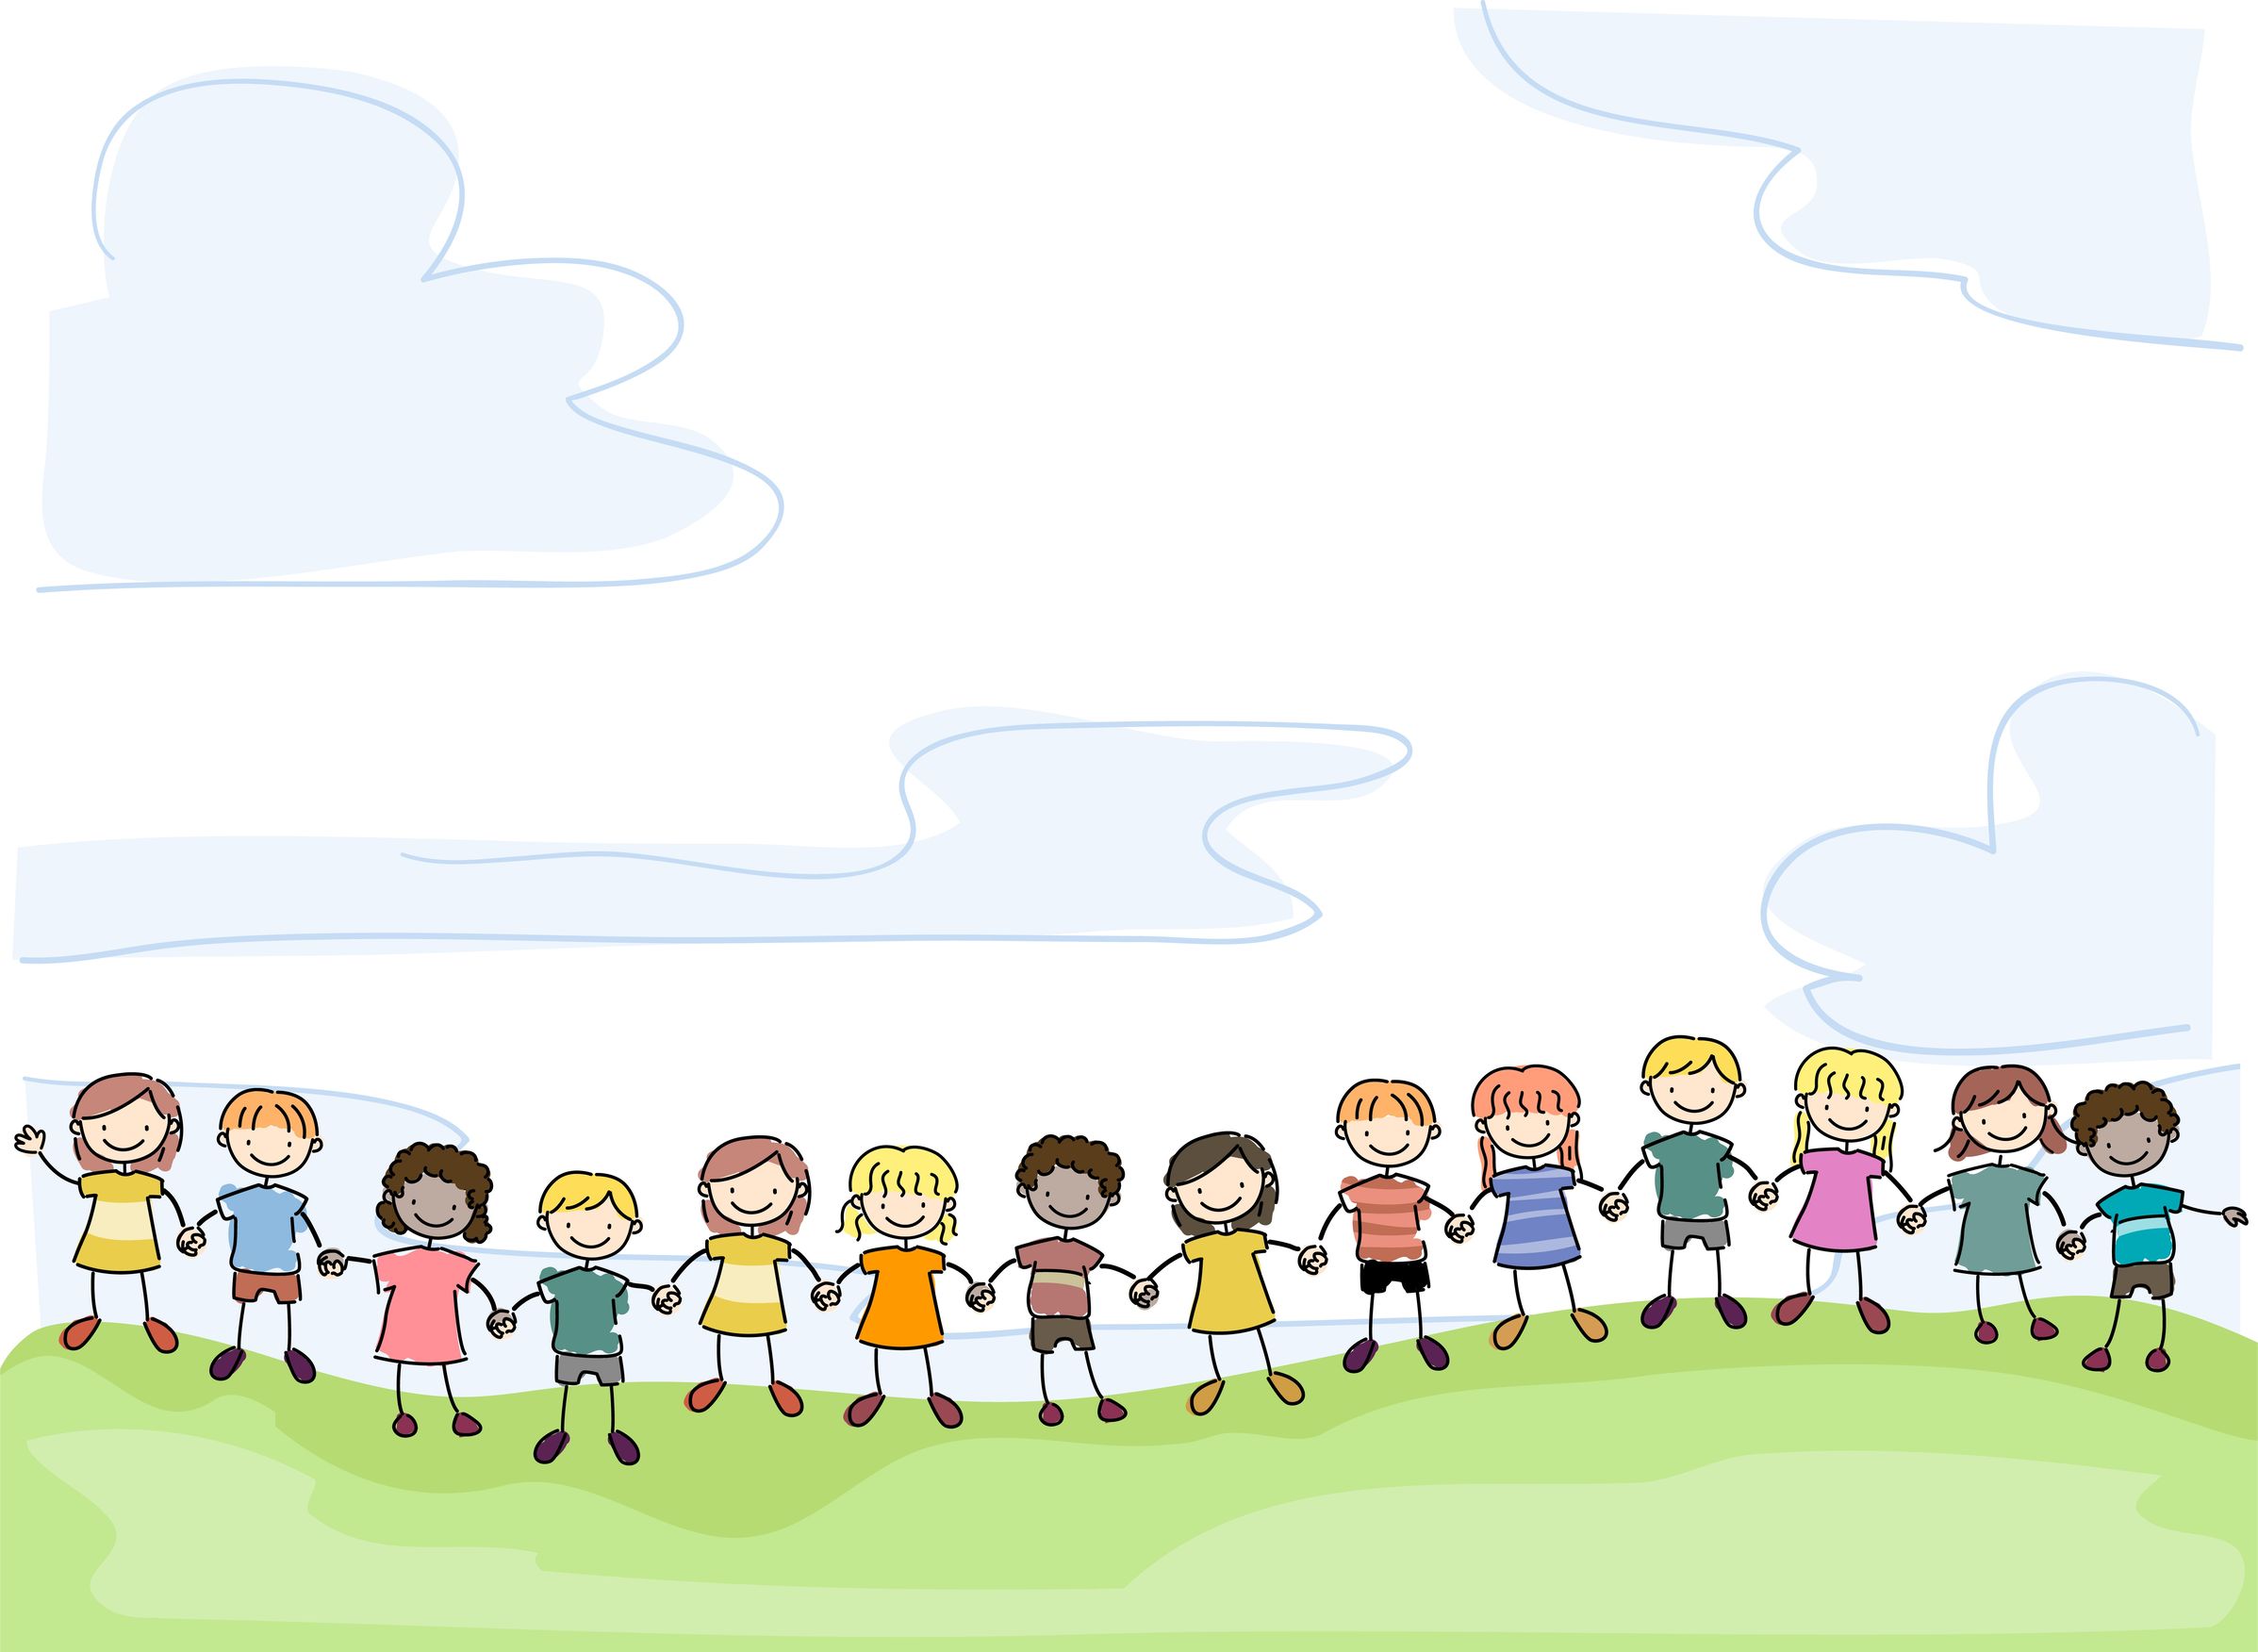 Illustrated image of children holding hands